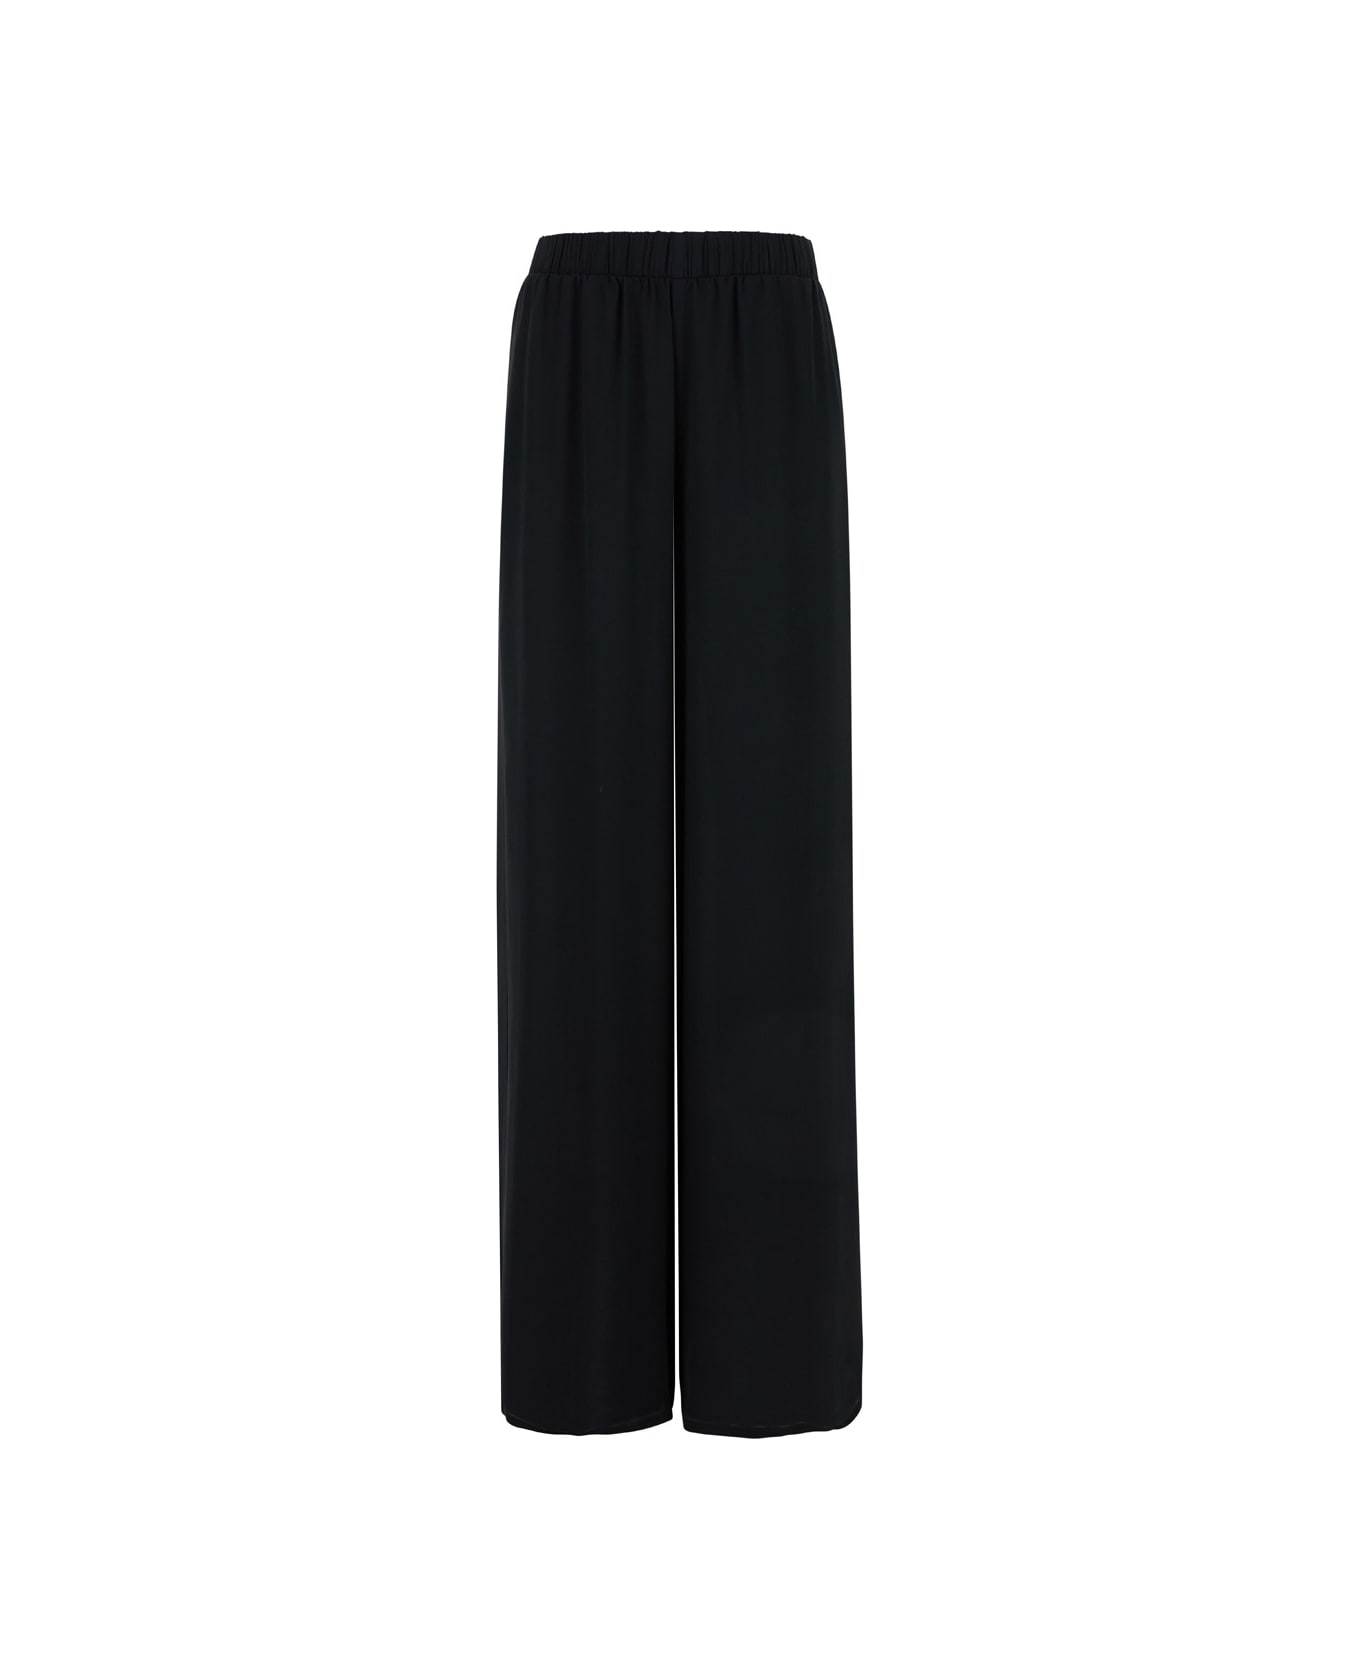 Federica Tosi Black Trousers With Elastic Waistband In Silk Blend Woman - Black